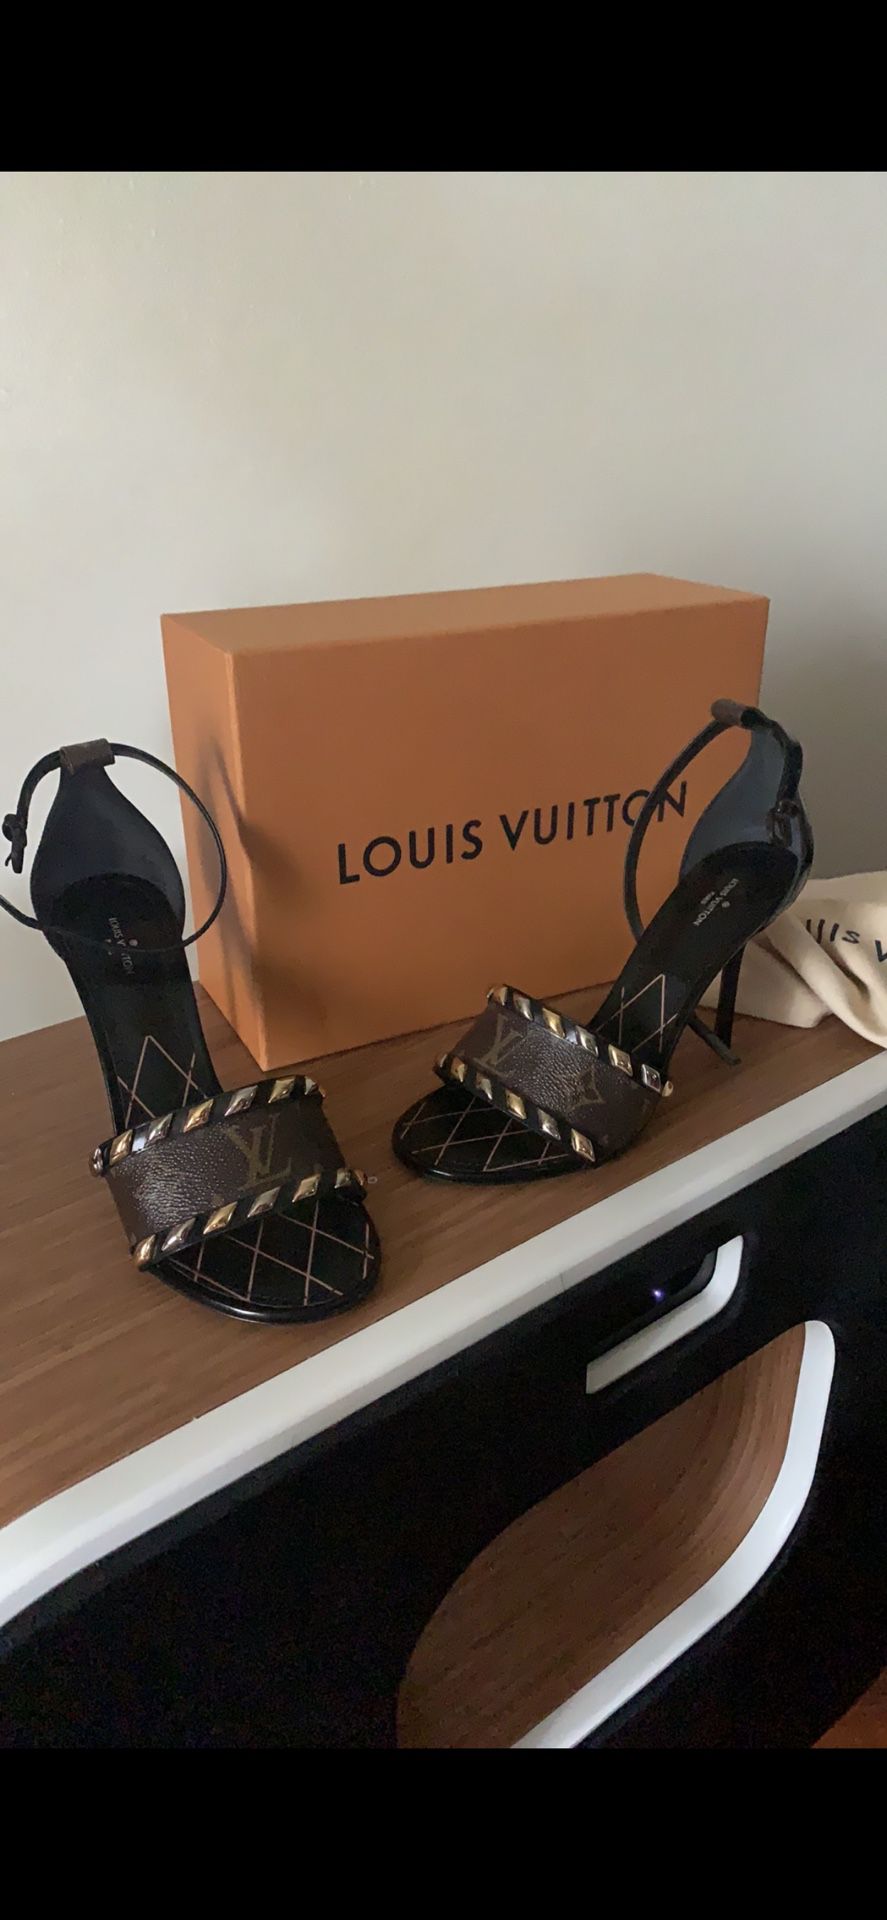 Louis Vuitton High Heeled Sandel 